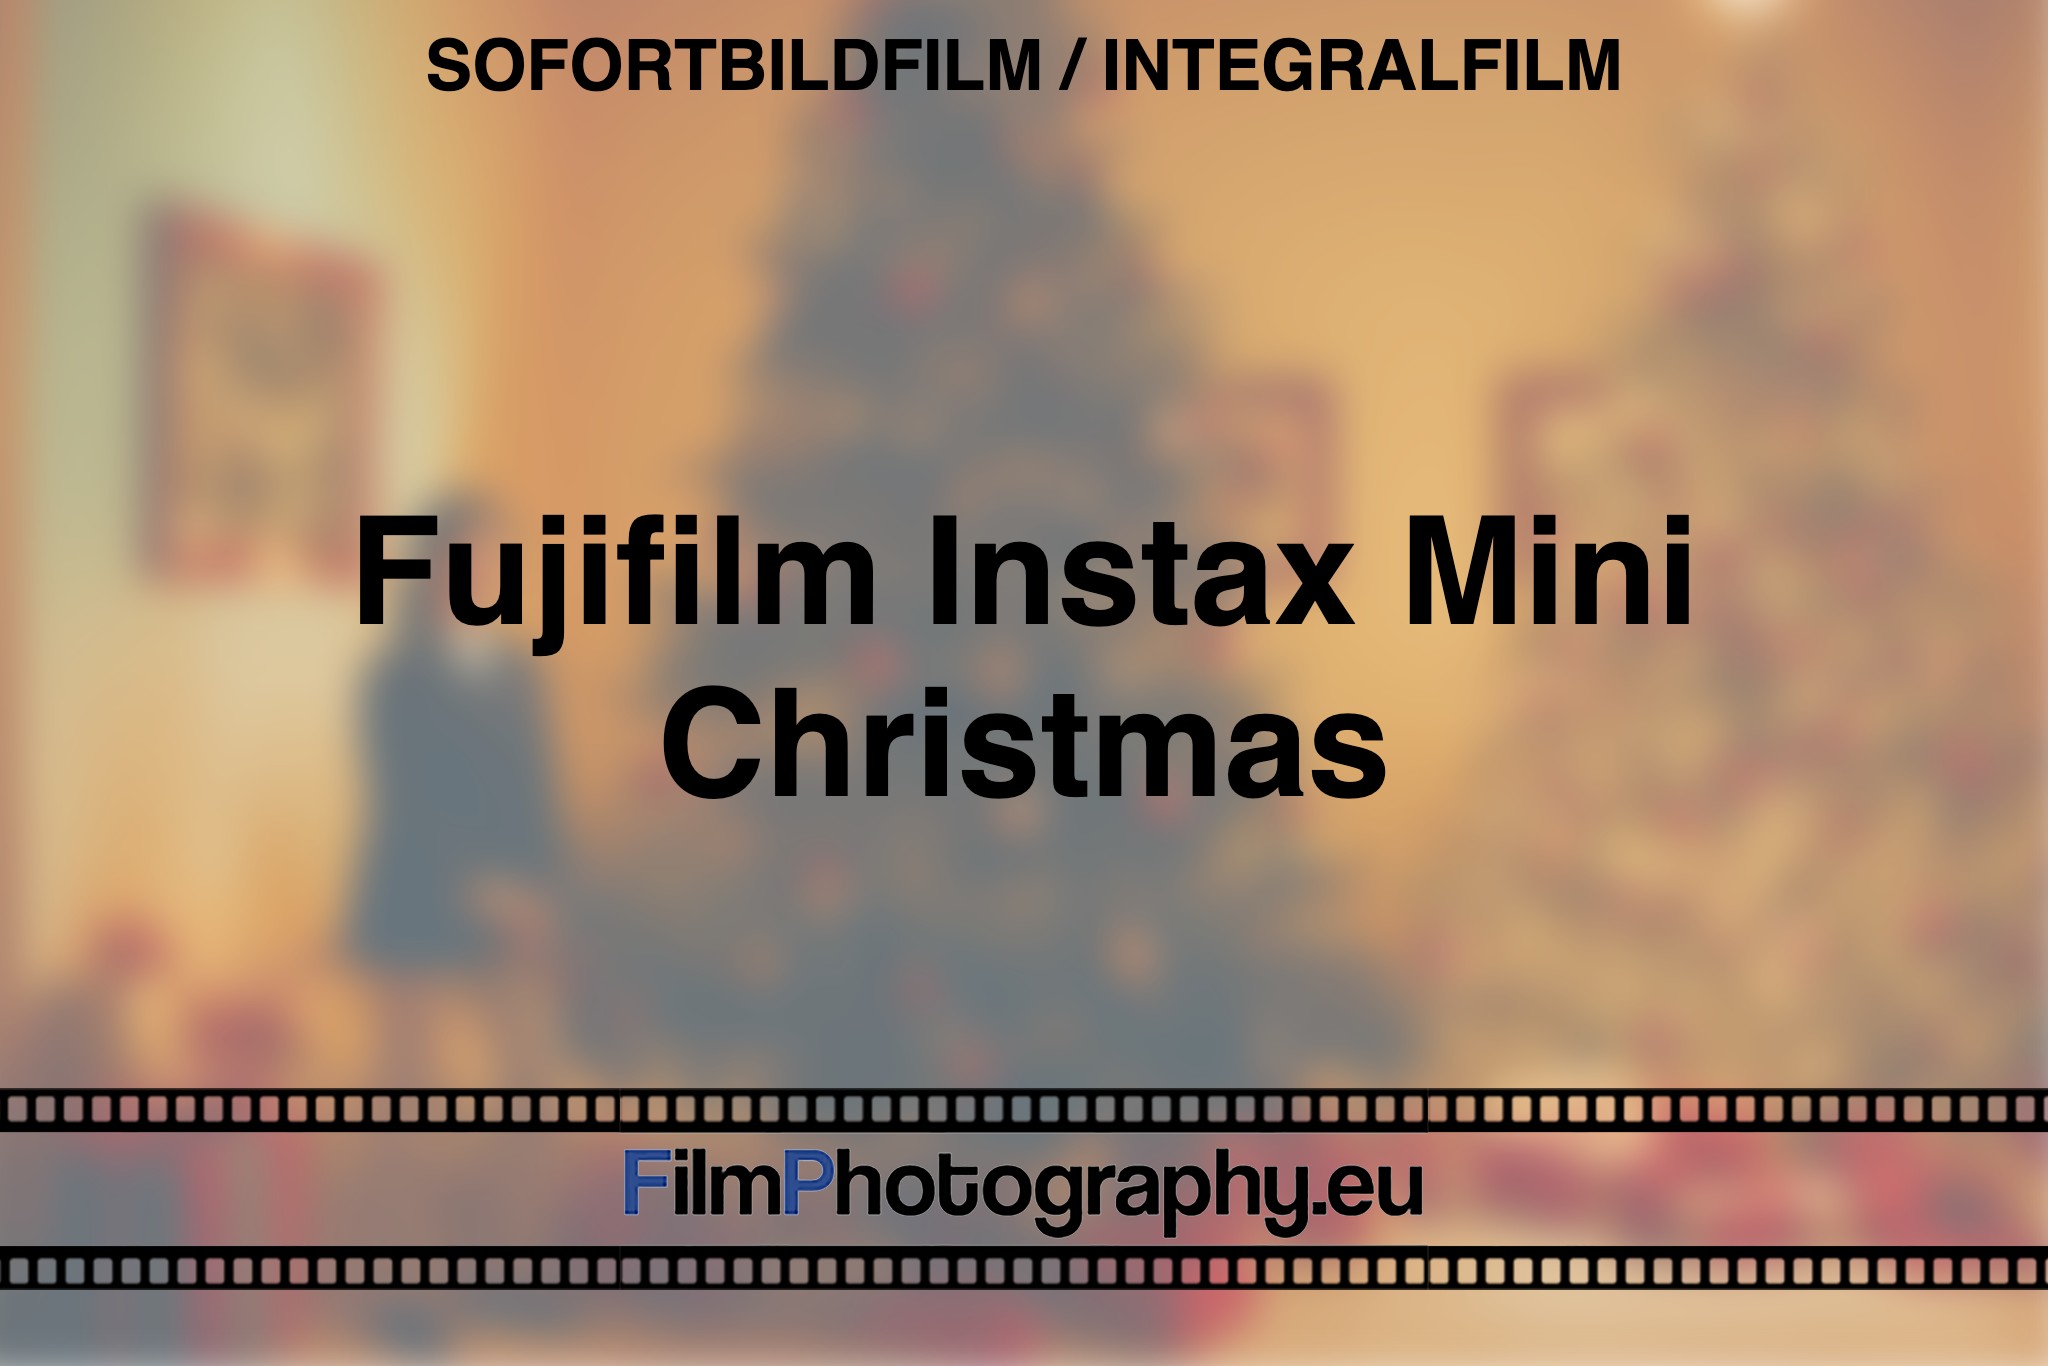 fujifilm-instax-mini-christmas-sofortbildfilm-integralfilm-fp-bnv